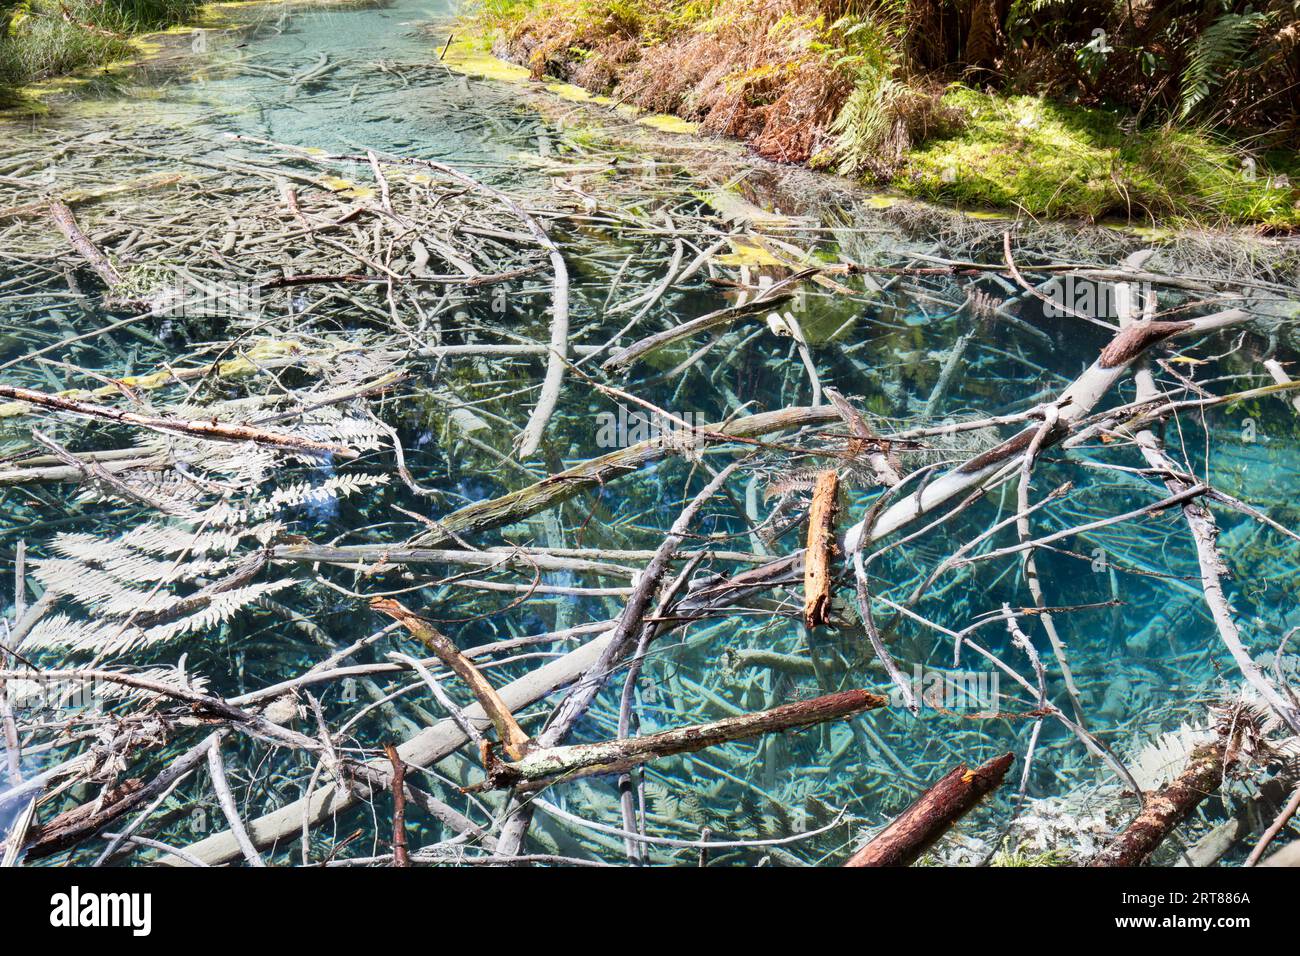 Acidic sulphur pools in the Redwoods forest park, Whakarewarewa, Rotorua, New Zealand Stock Photo